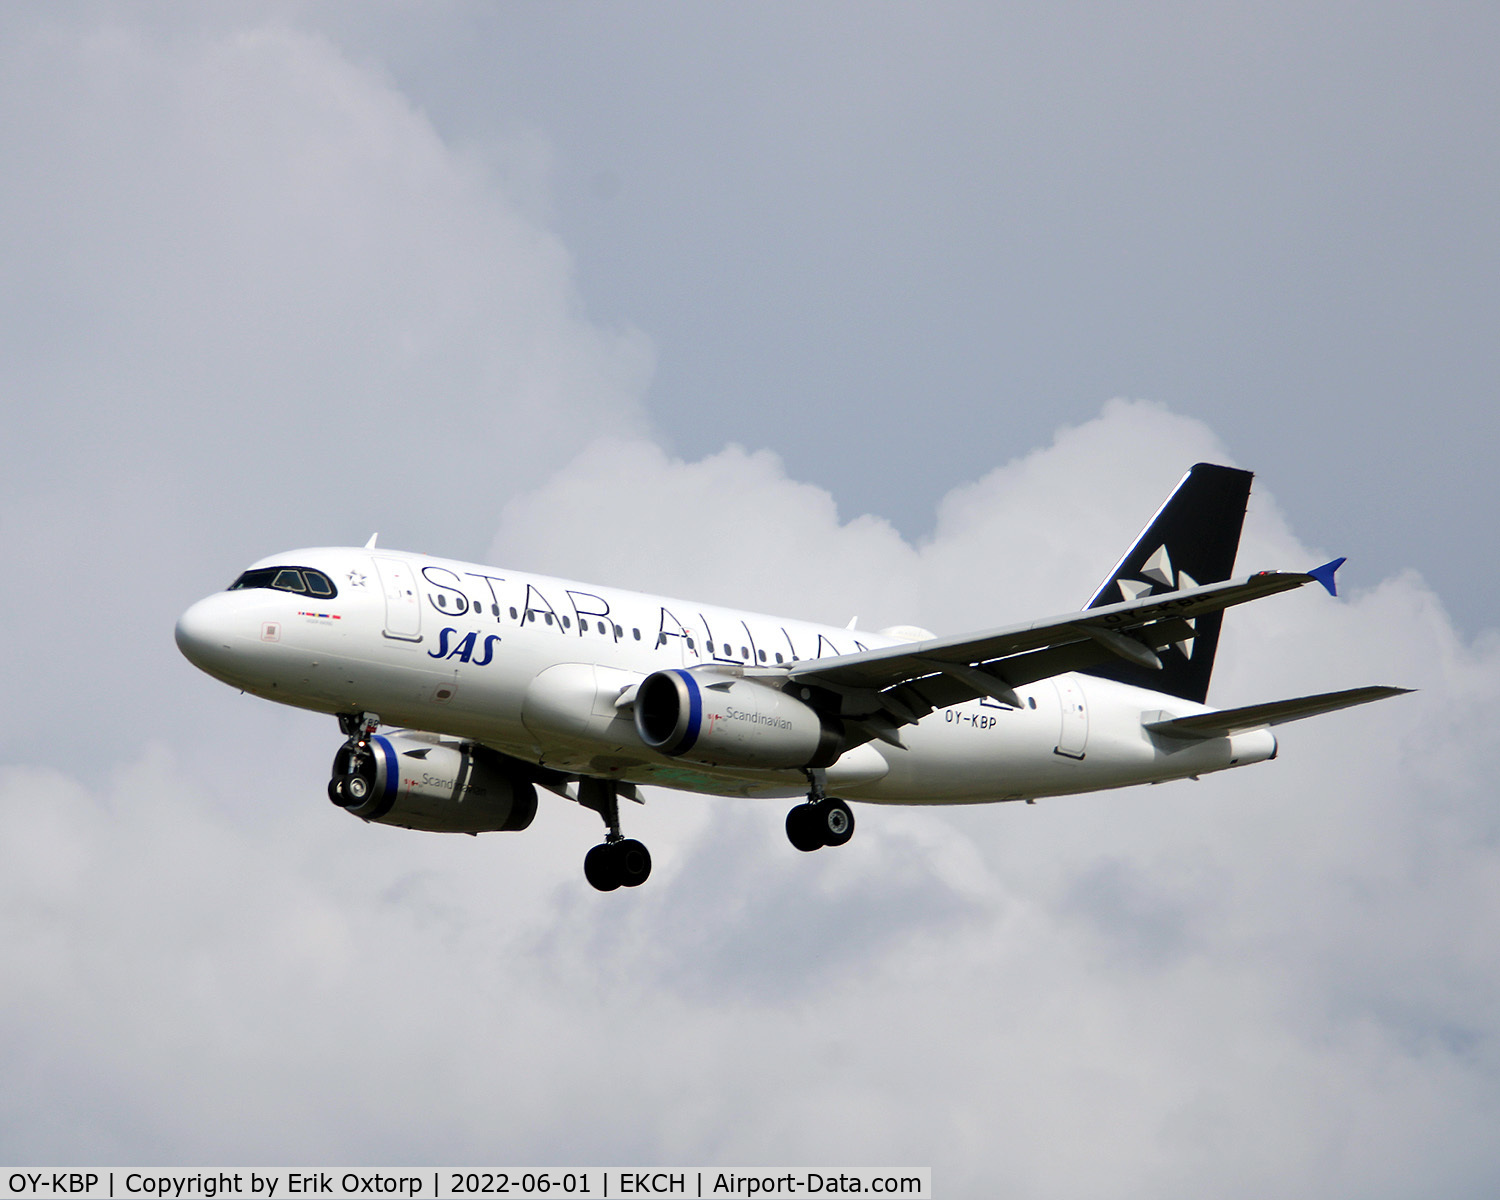 OY-KBP, 2006 Airbus A319-132 C/N 2888, OY-KBP landing rw 22L